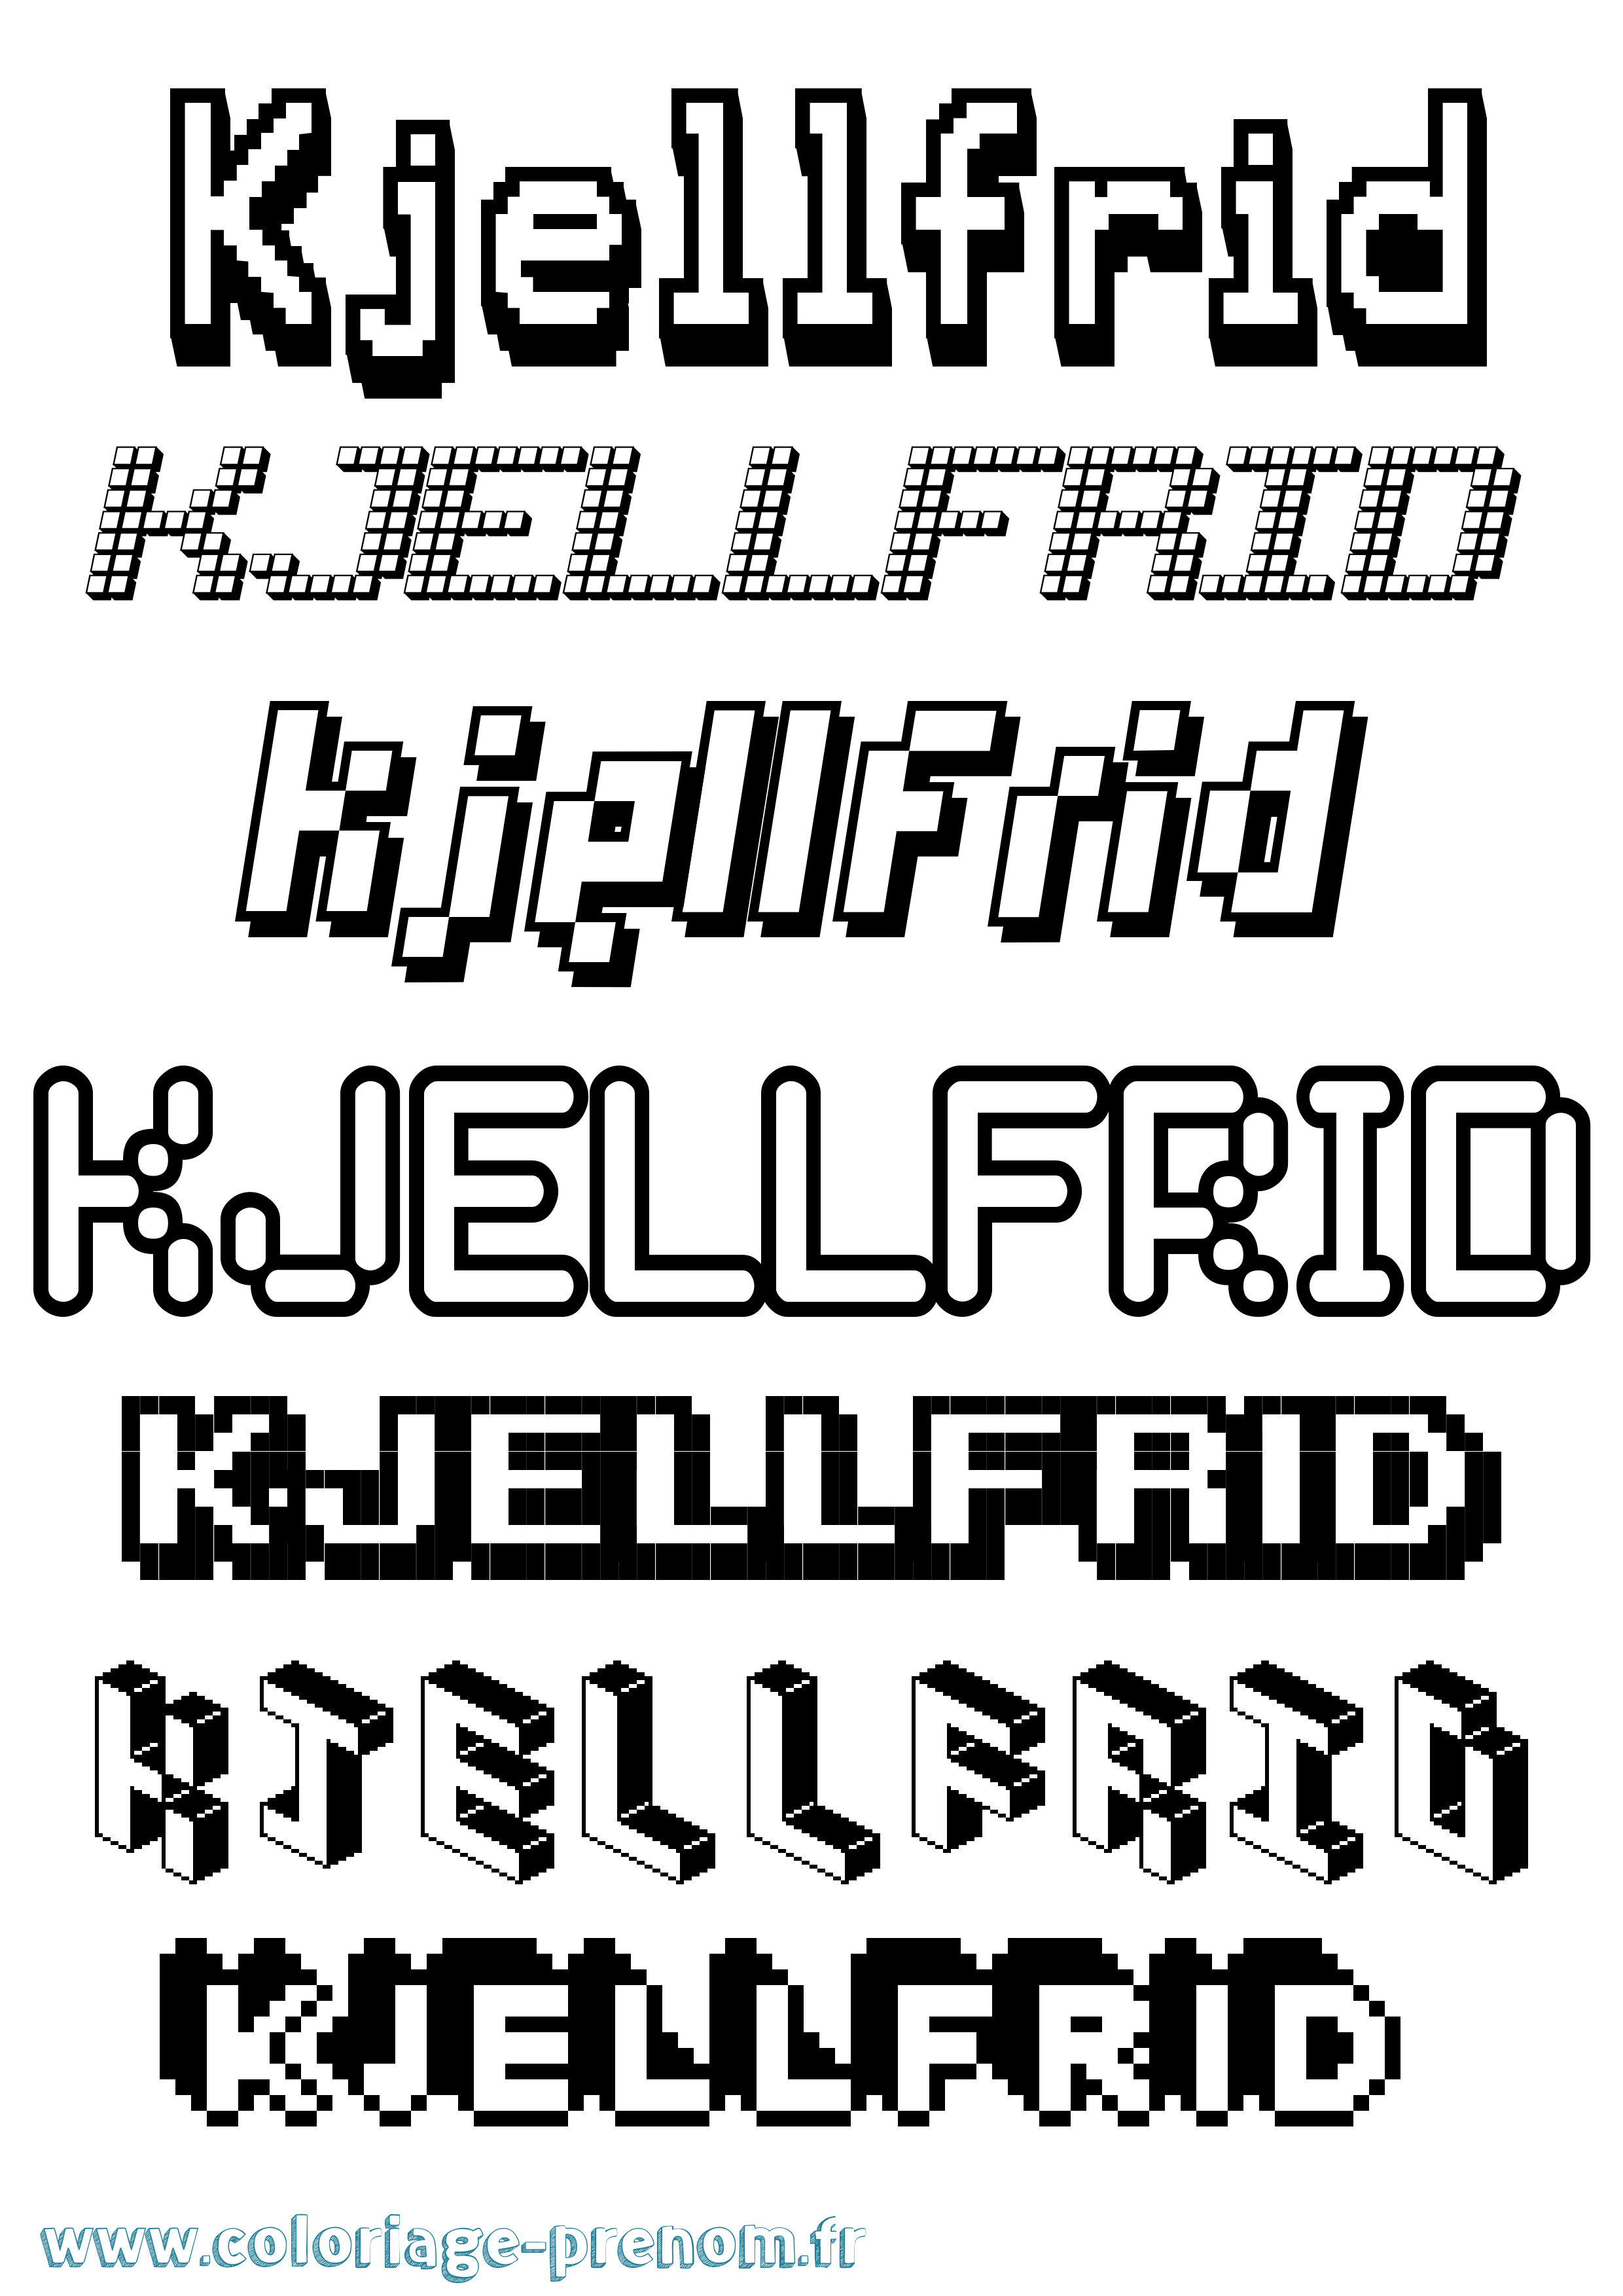 Coloriage prénom Kjellfrid Pixel